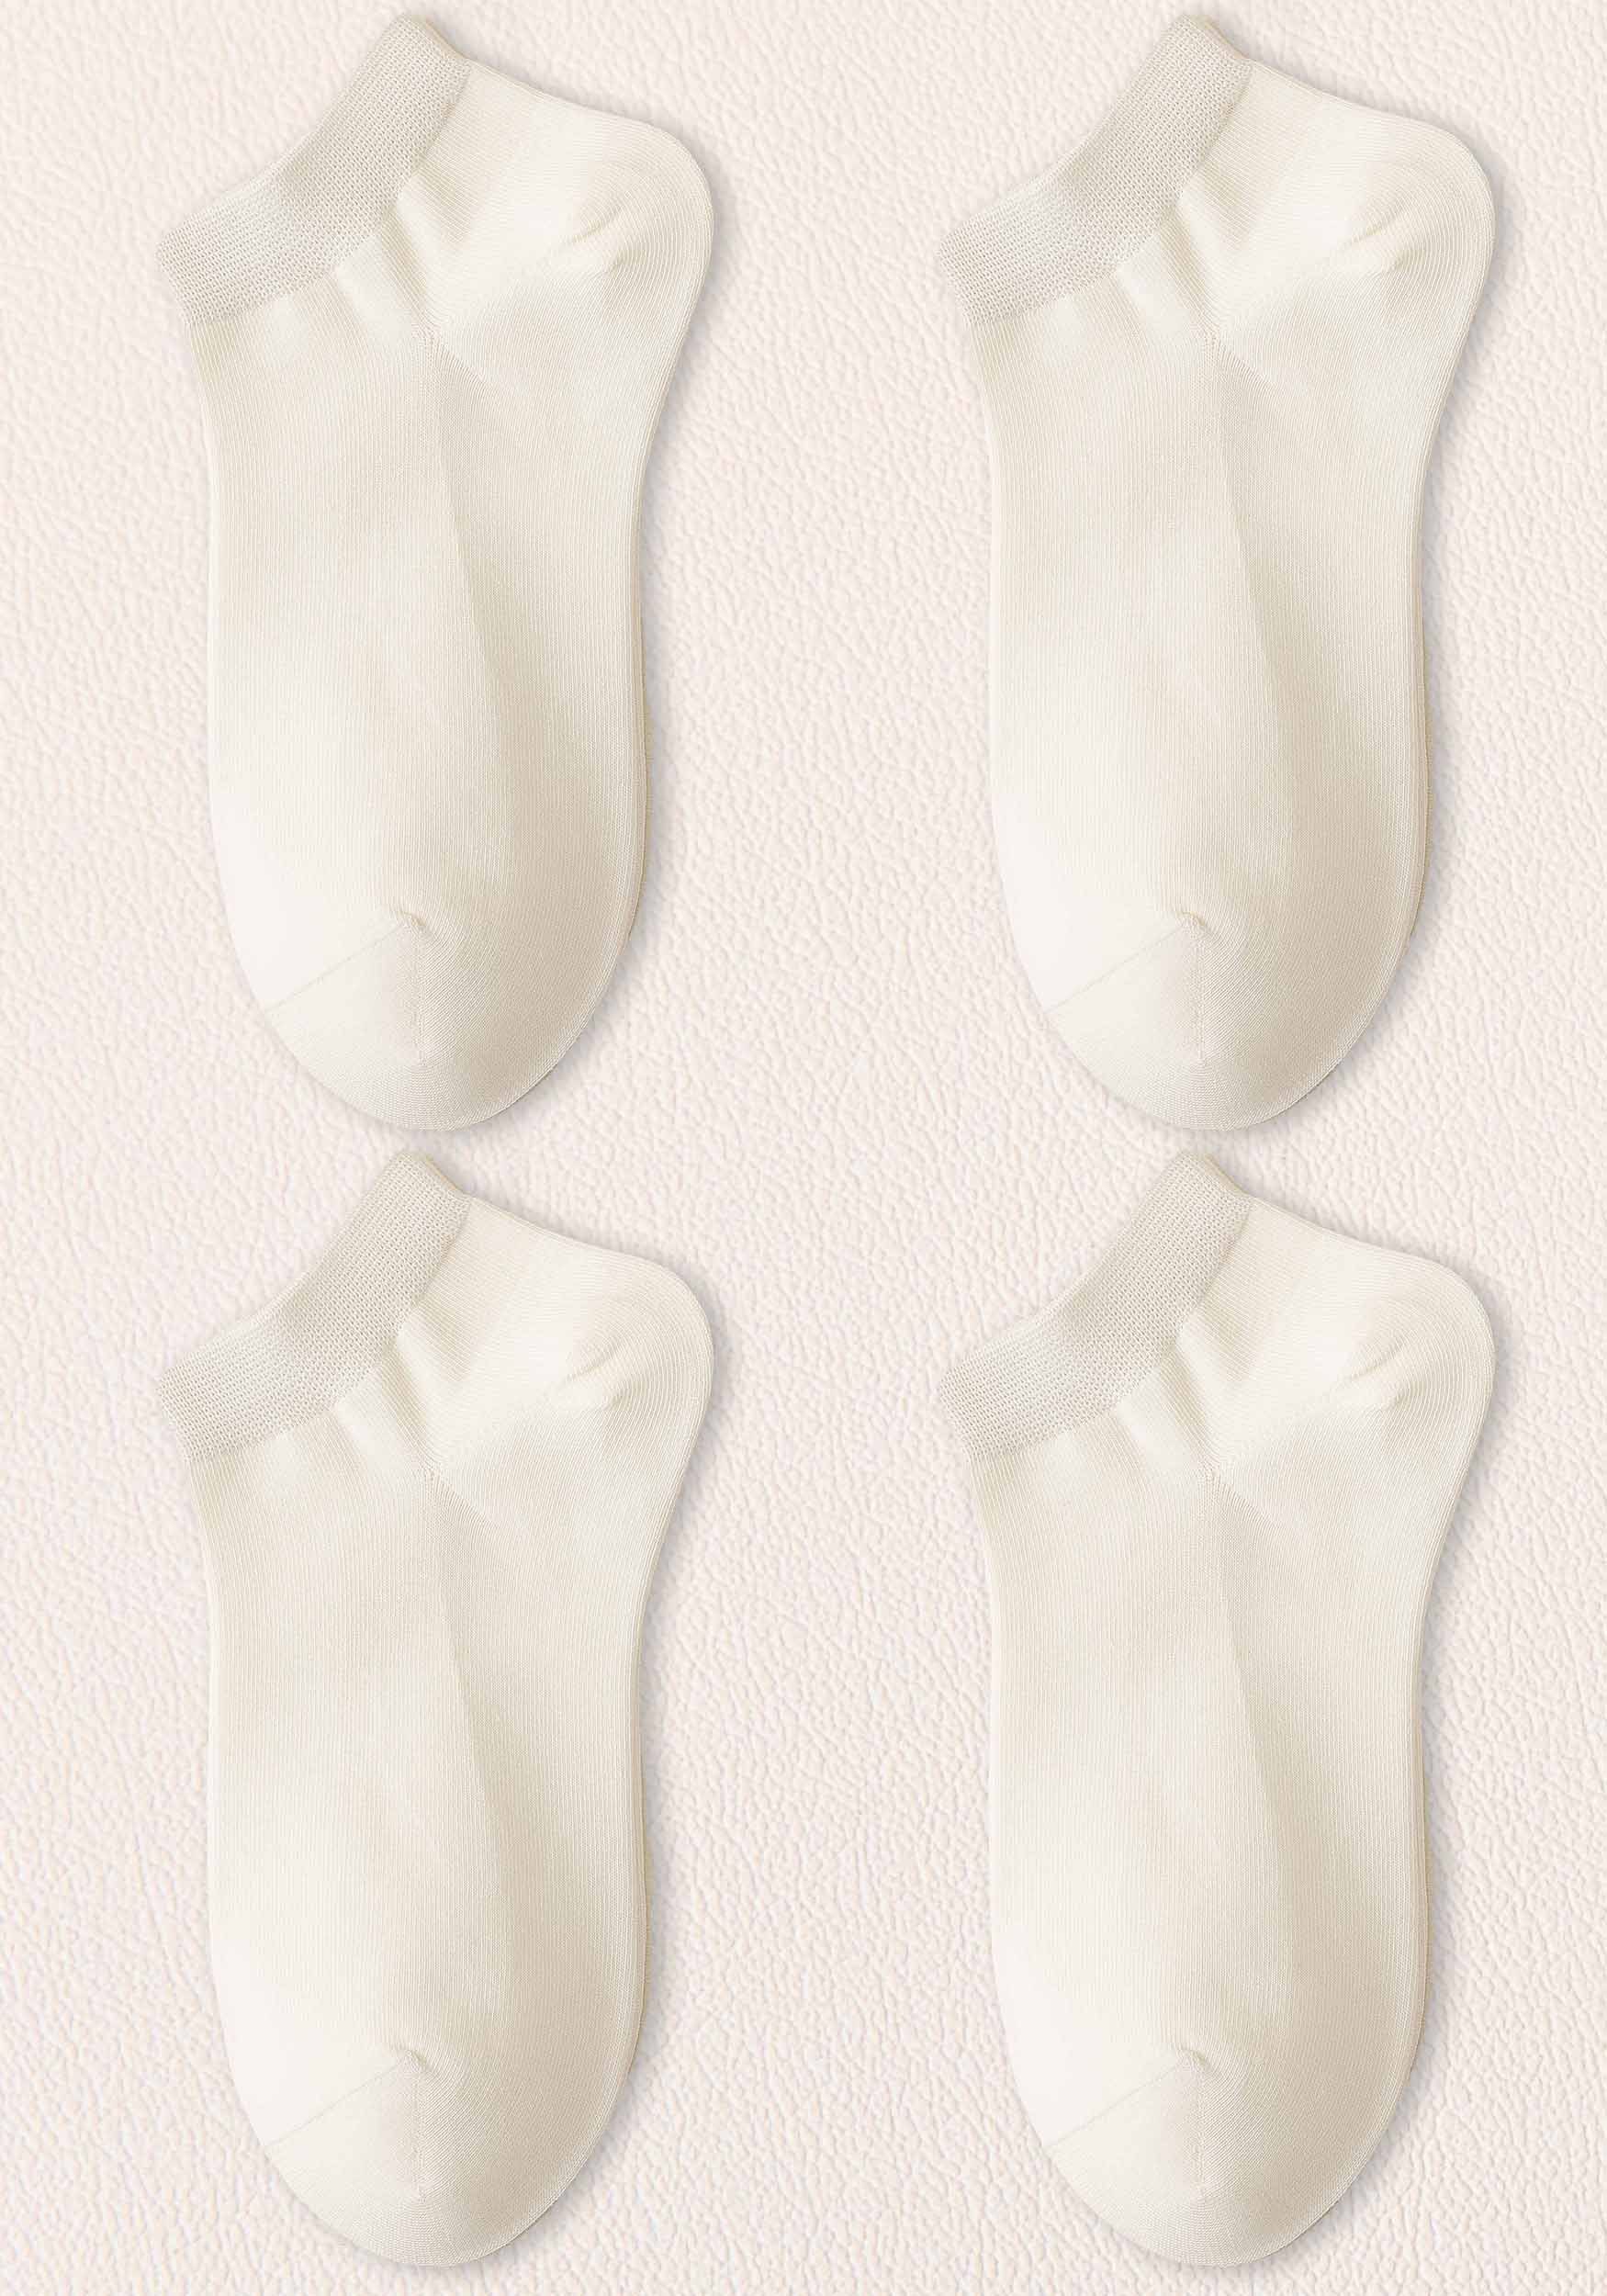 MAGICSHE Freizeitsocken Damen Socken– warm, atmungsaktiv,lange haltbar, kein Verrutschen (4-Paar) Invisible Socken bequem Sneakersocken Weiß | Wandersocken